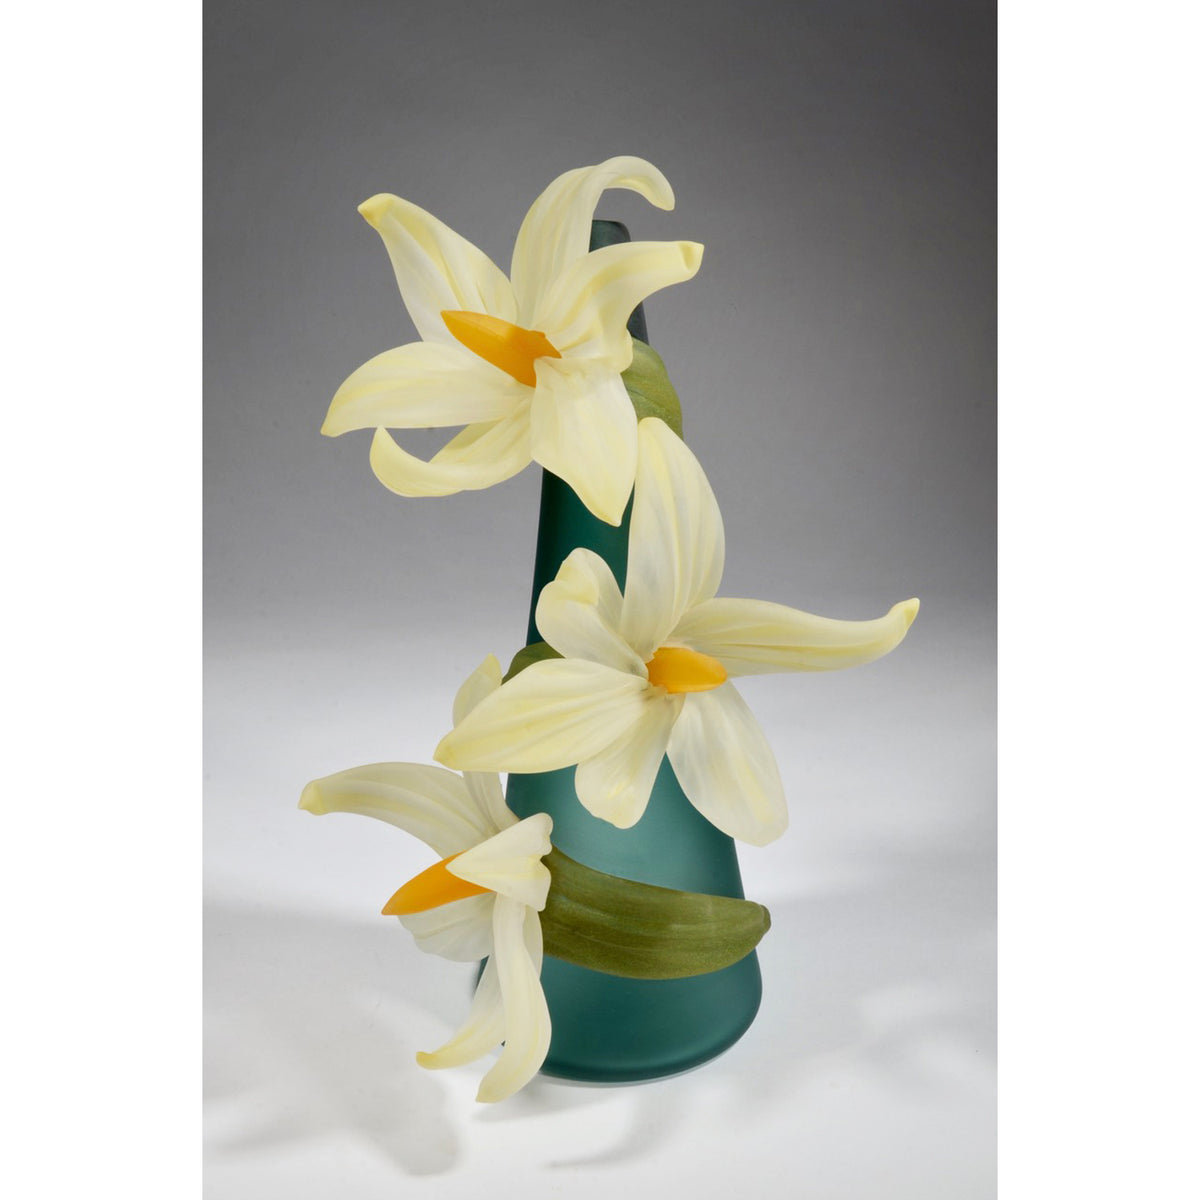 Sue Rankin - Lg Sprig Vase Green with Vanilla Lillies, 11.5" x 6" x 5.5"